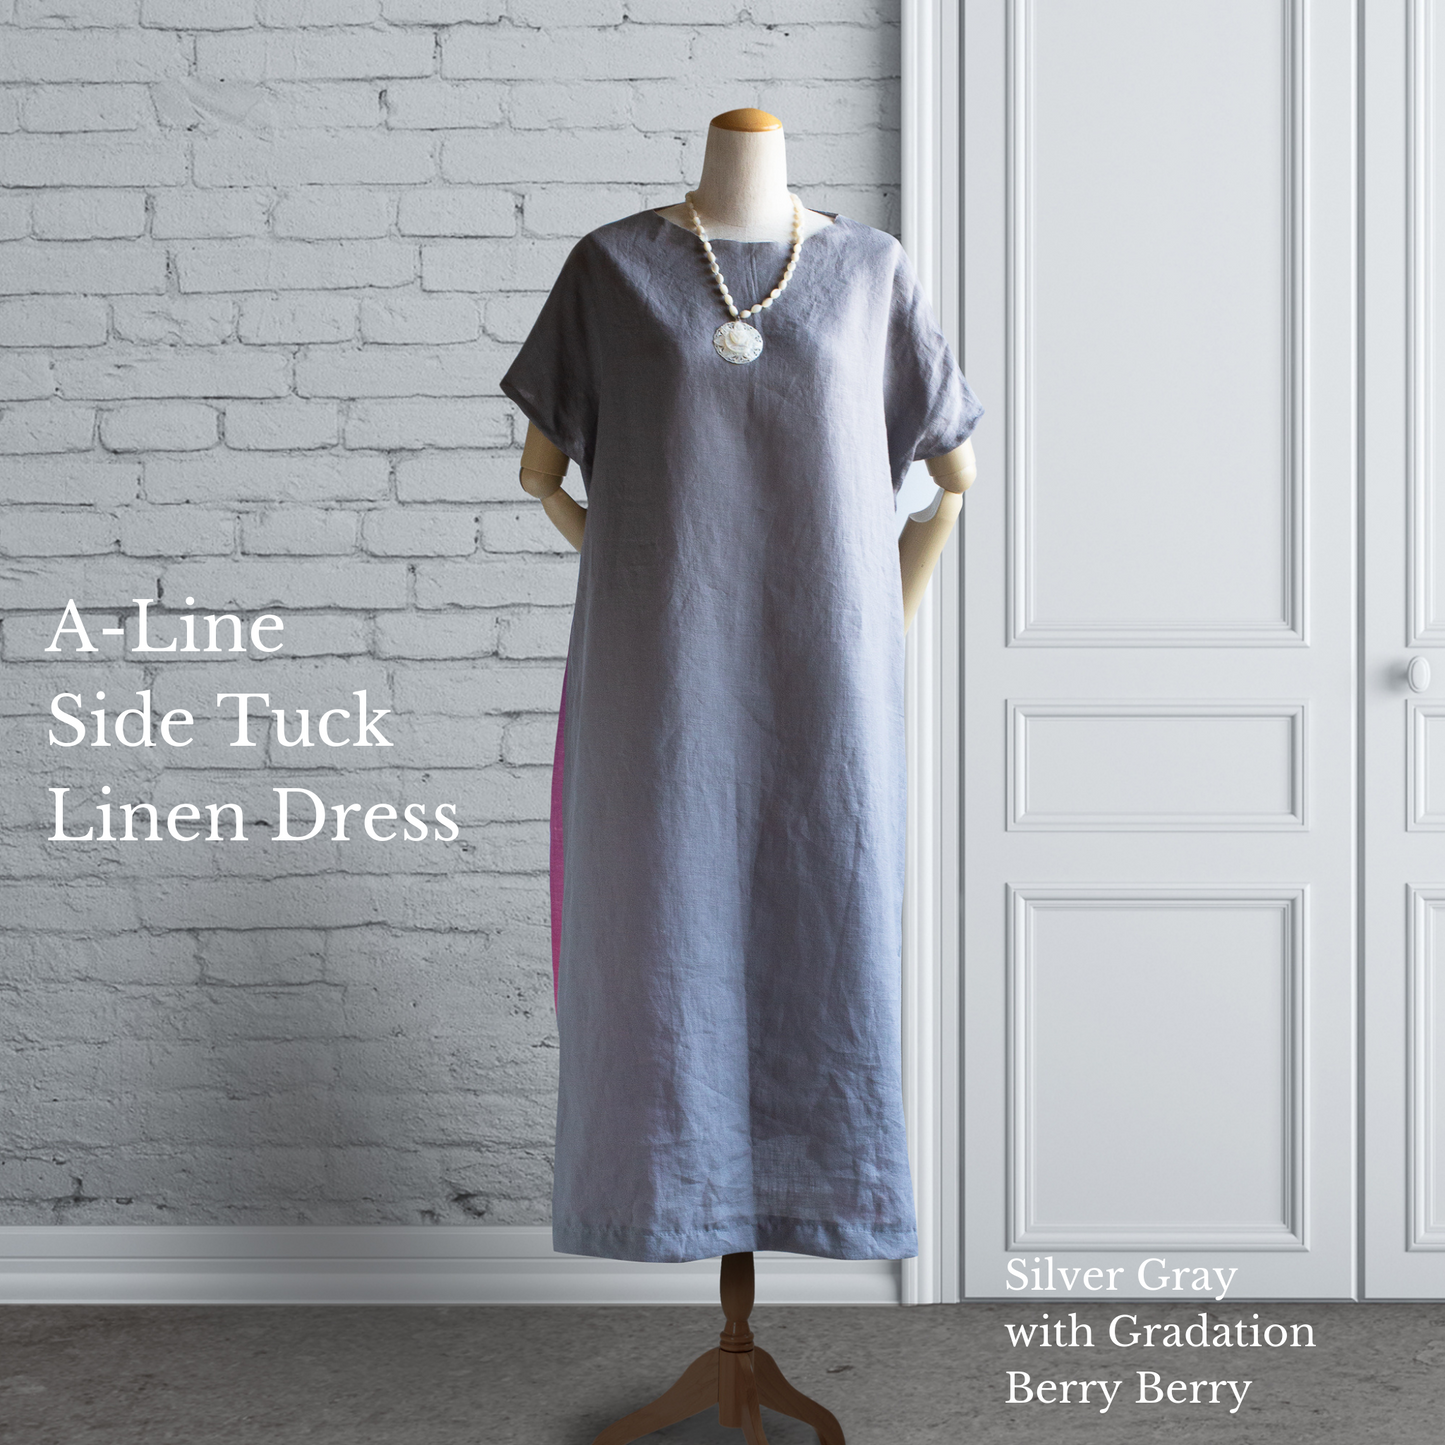 PSNY Hemp Linen Silver Gray Gradation Very Berry Side Tuck Dress French Sleeve AP20 